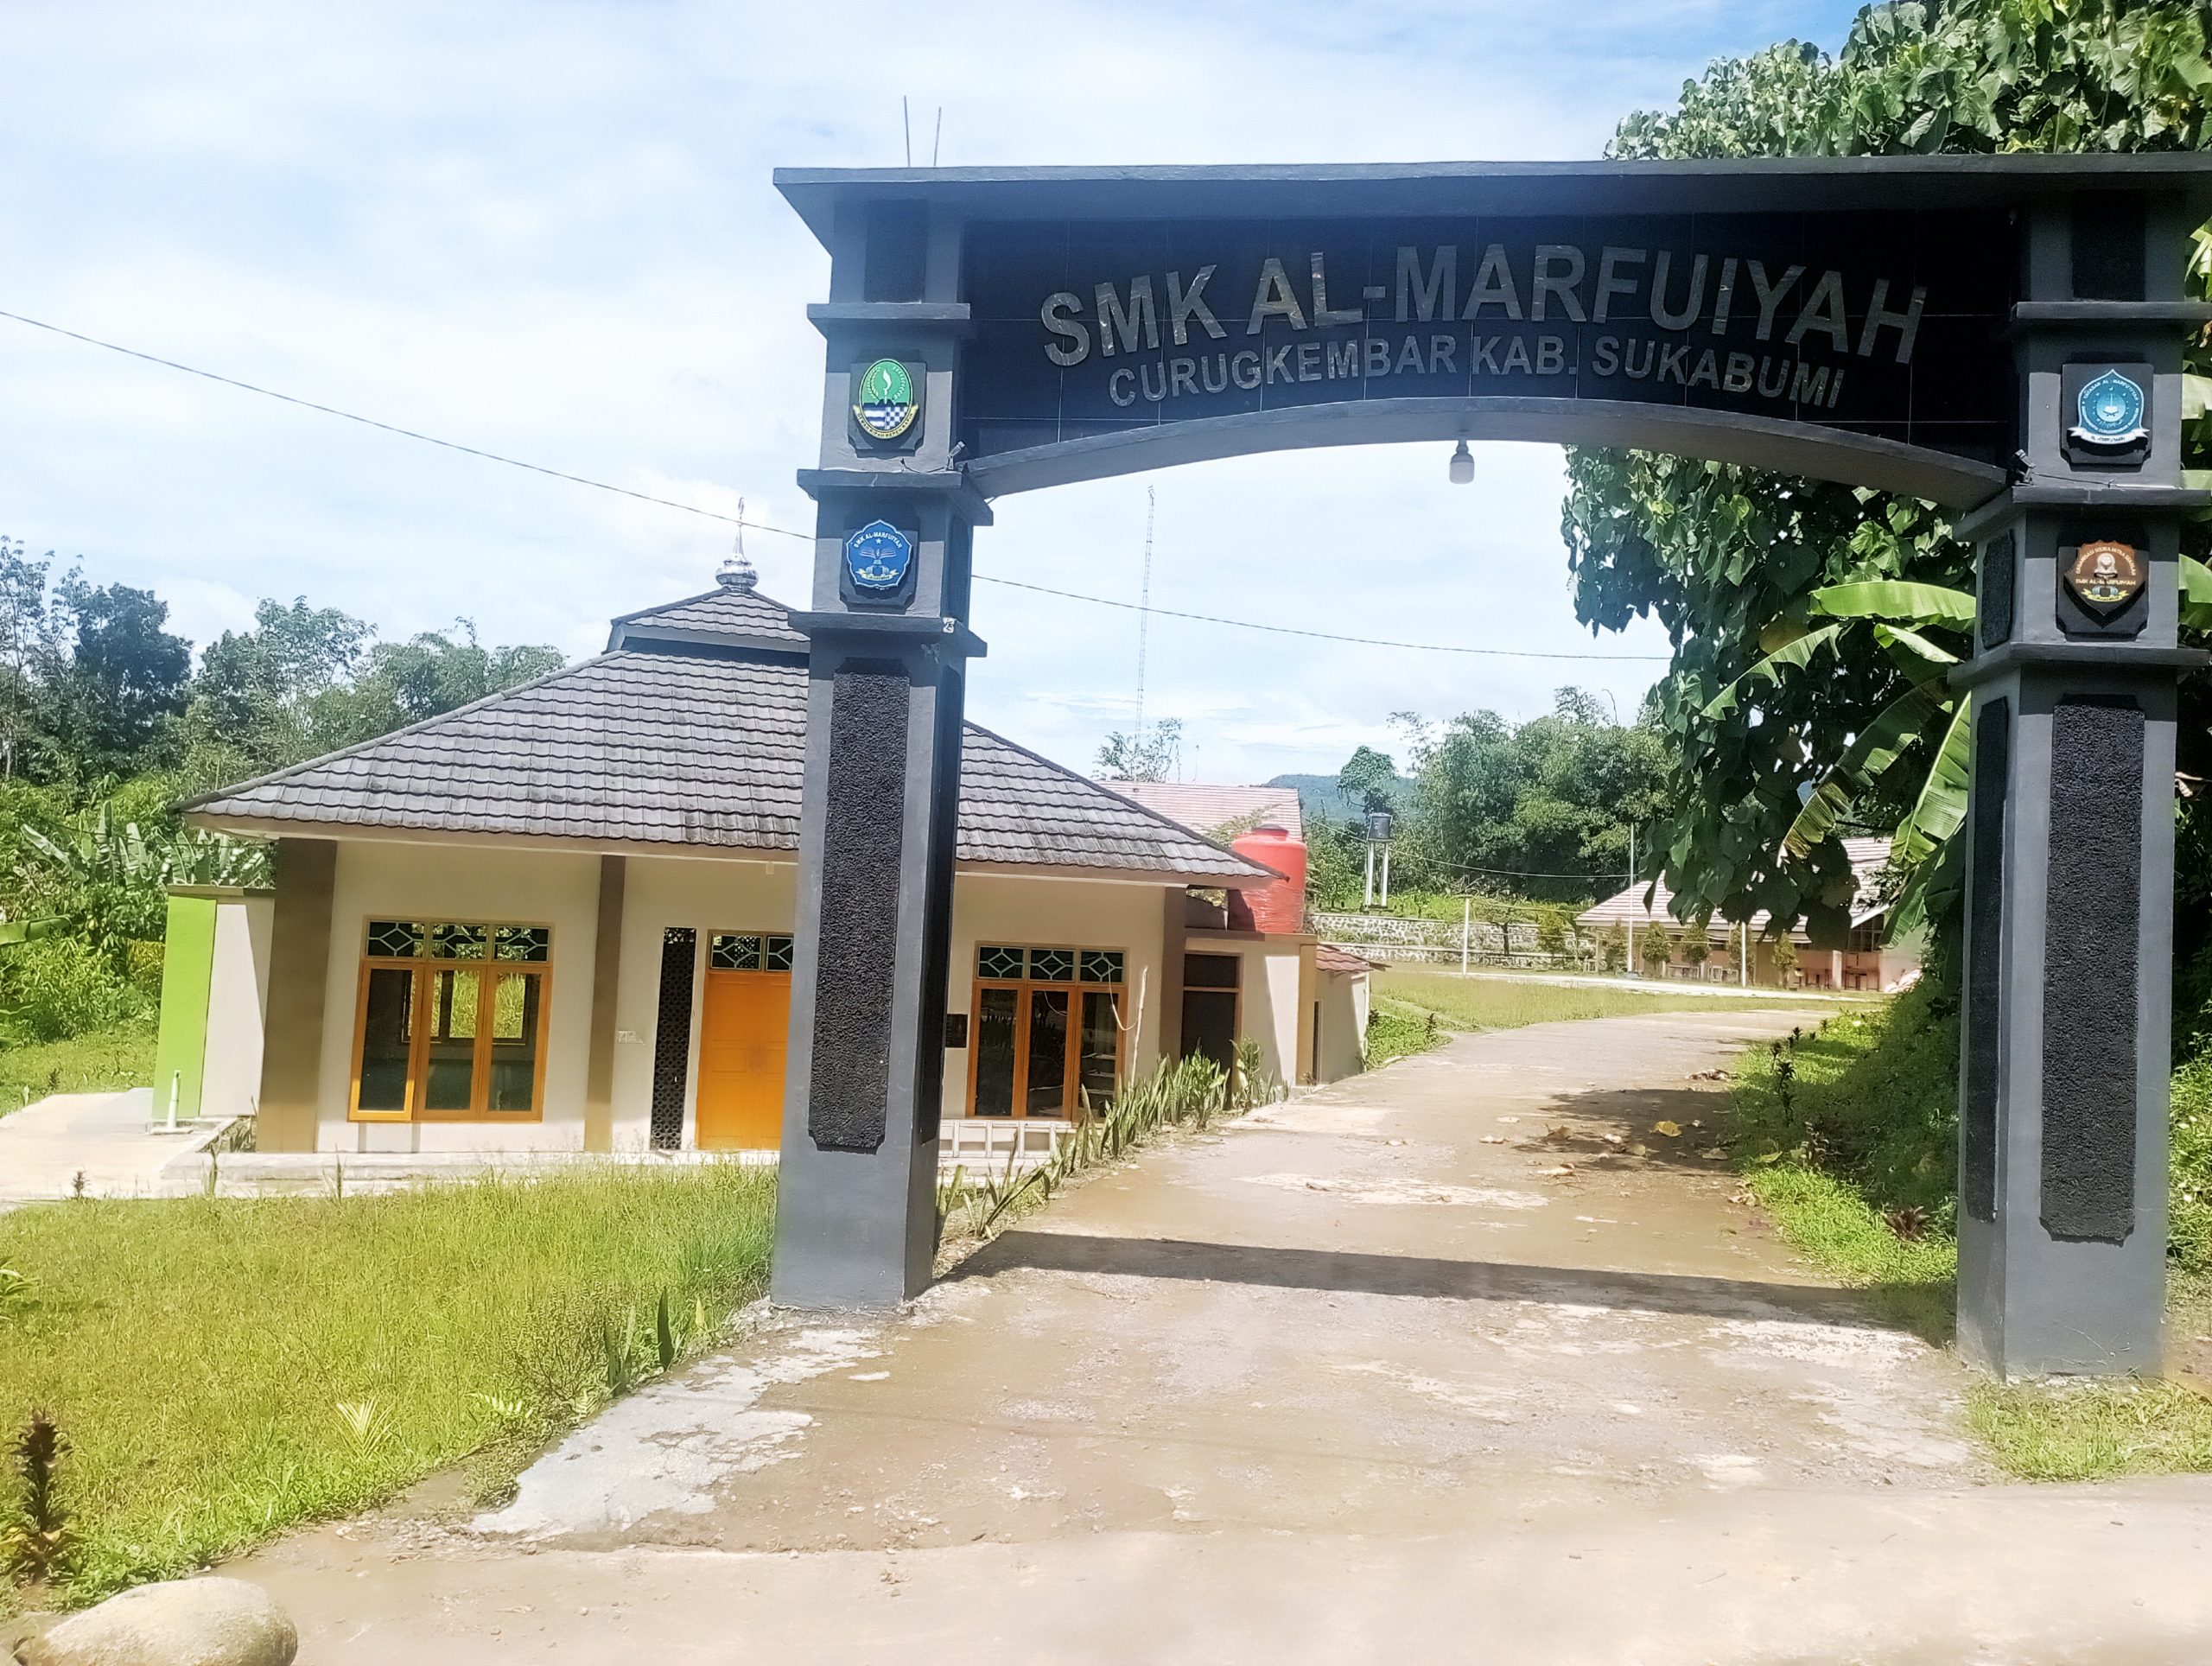 Usulan Lokasi Sedekah Air untuk SMK Al-Marfuiyah di Kampung Sindangkerta, Desa Curugkembar, Kecamatan Curugkembar, Kabupaten Sukabumi, Jawa Barat